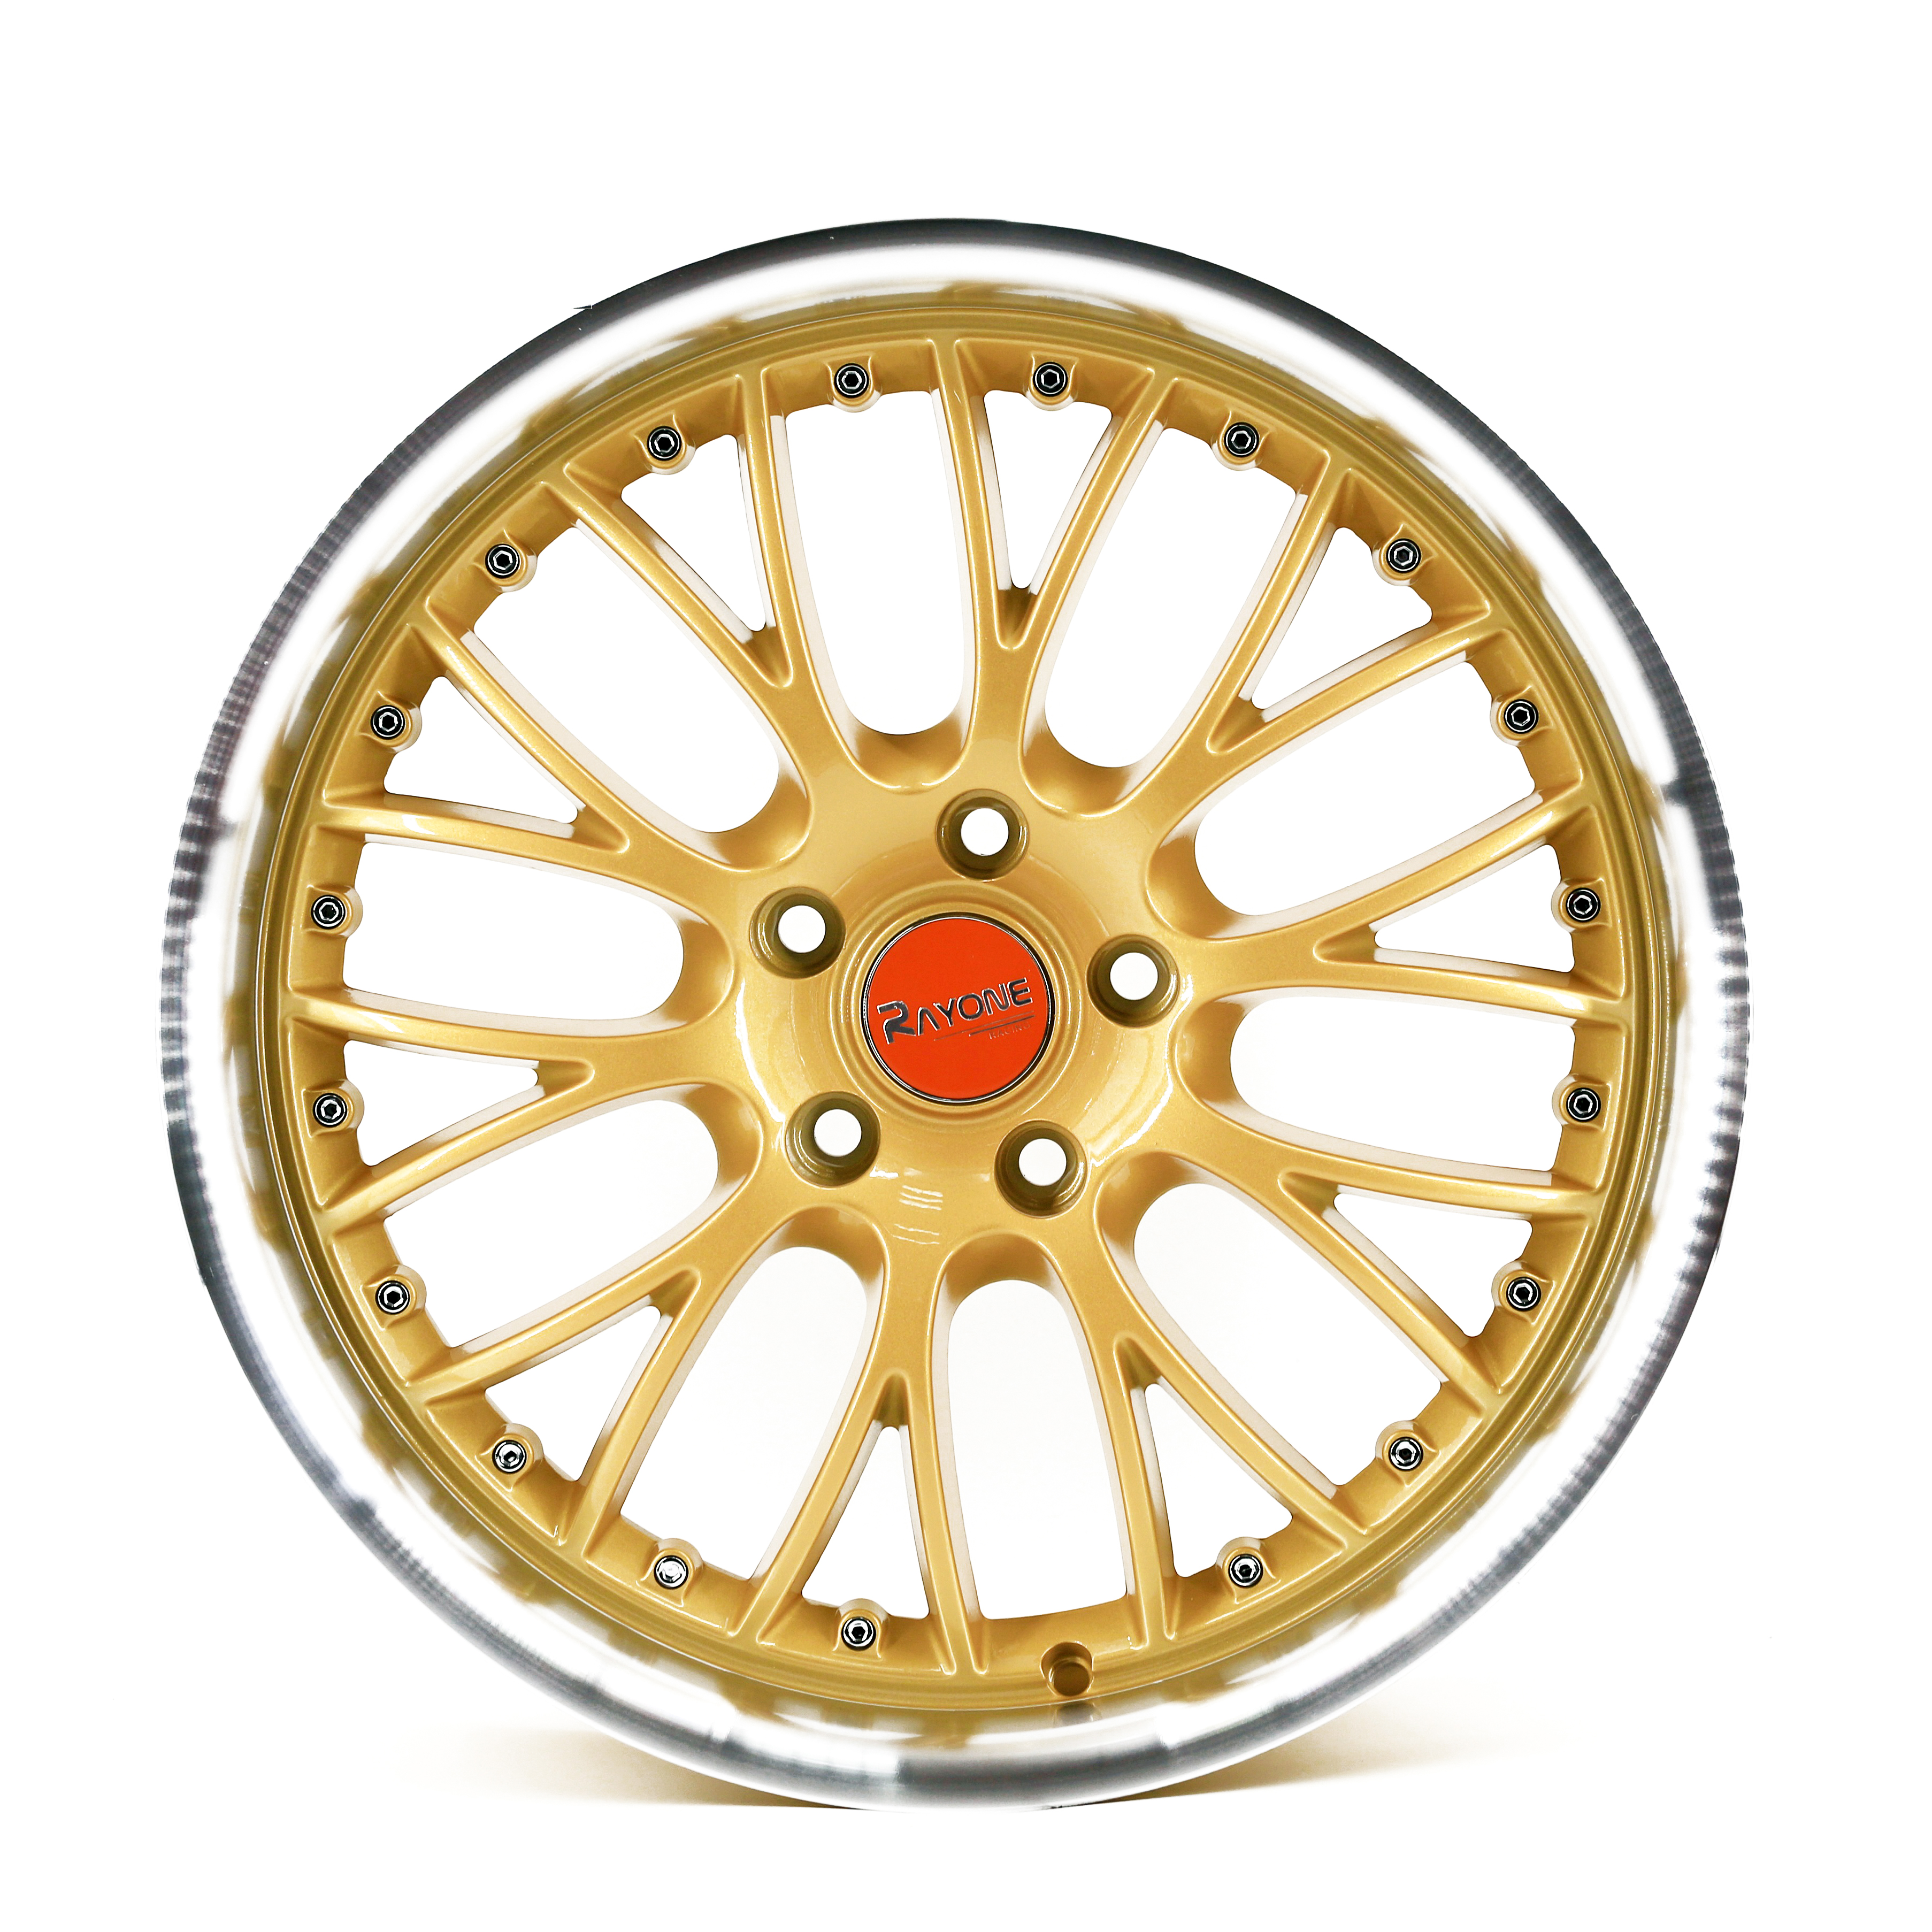 Top Mesh Deisgn18Inch Aluminum Alloy Wheel Rims For Racing Car